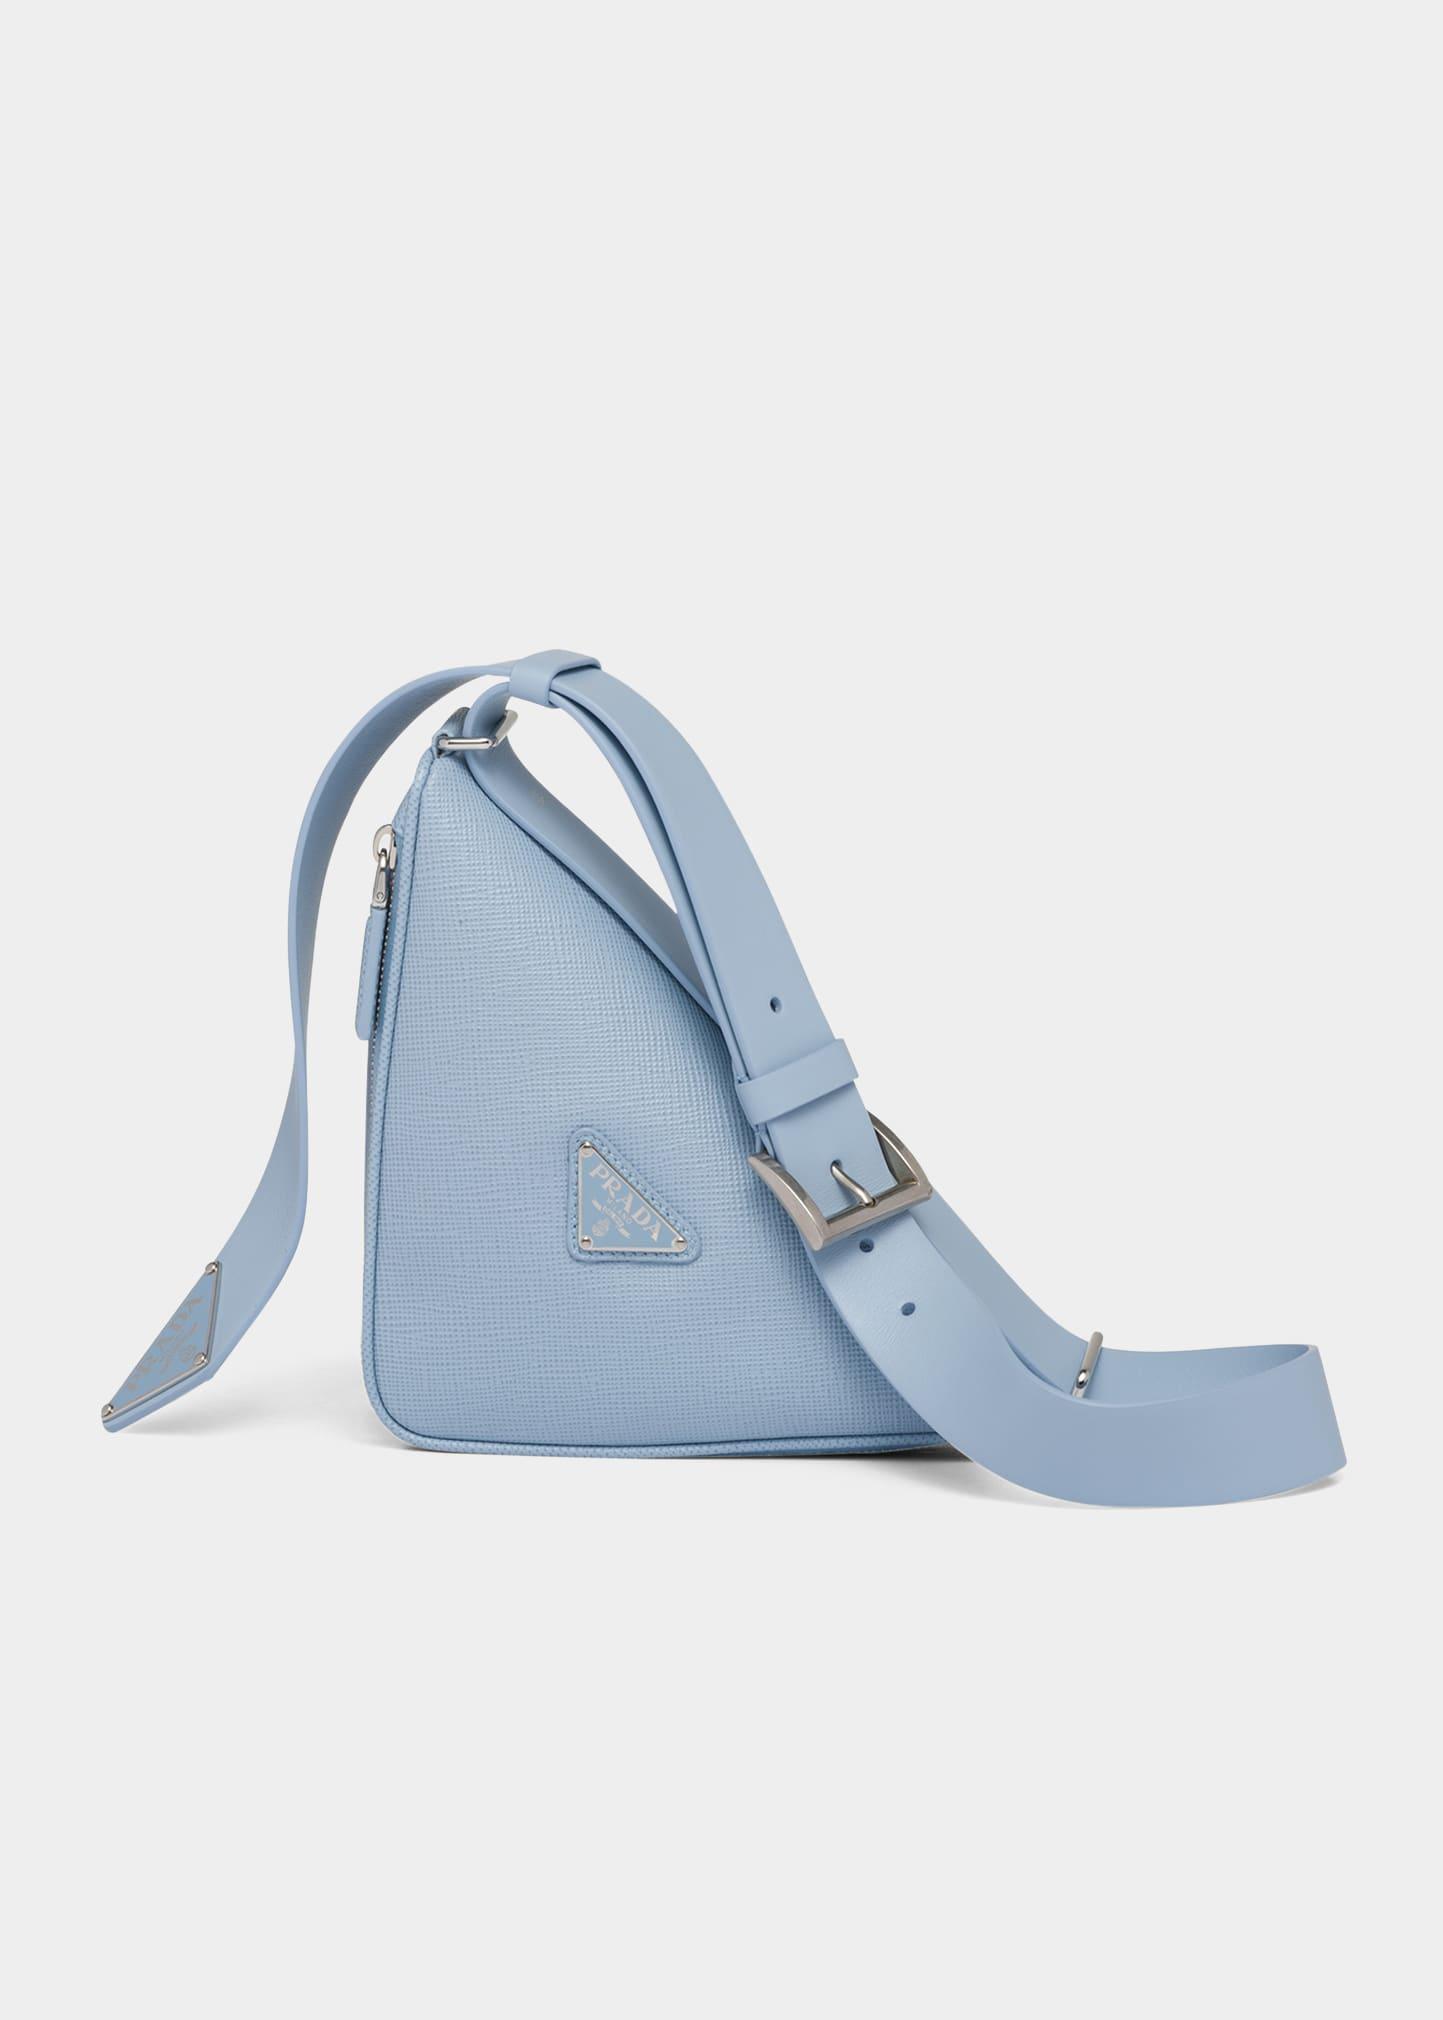 Prada Logo-Embossed Saffiano Leather Bag - Blue for Men